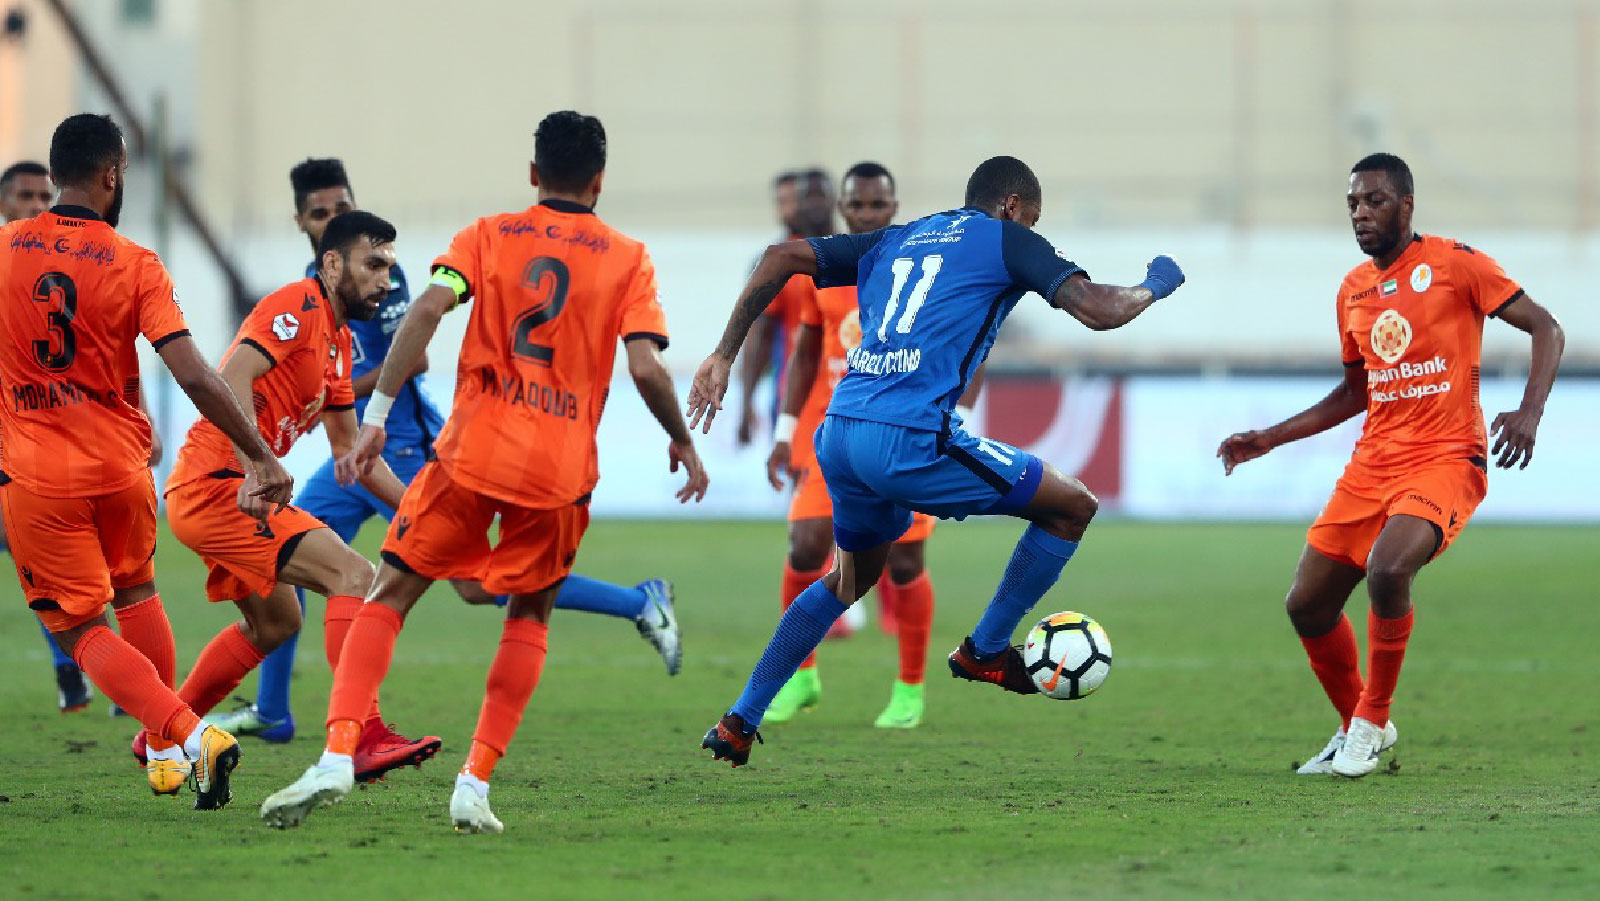 Al Nasr continues to win by defeating Ajman Al Nasr Club